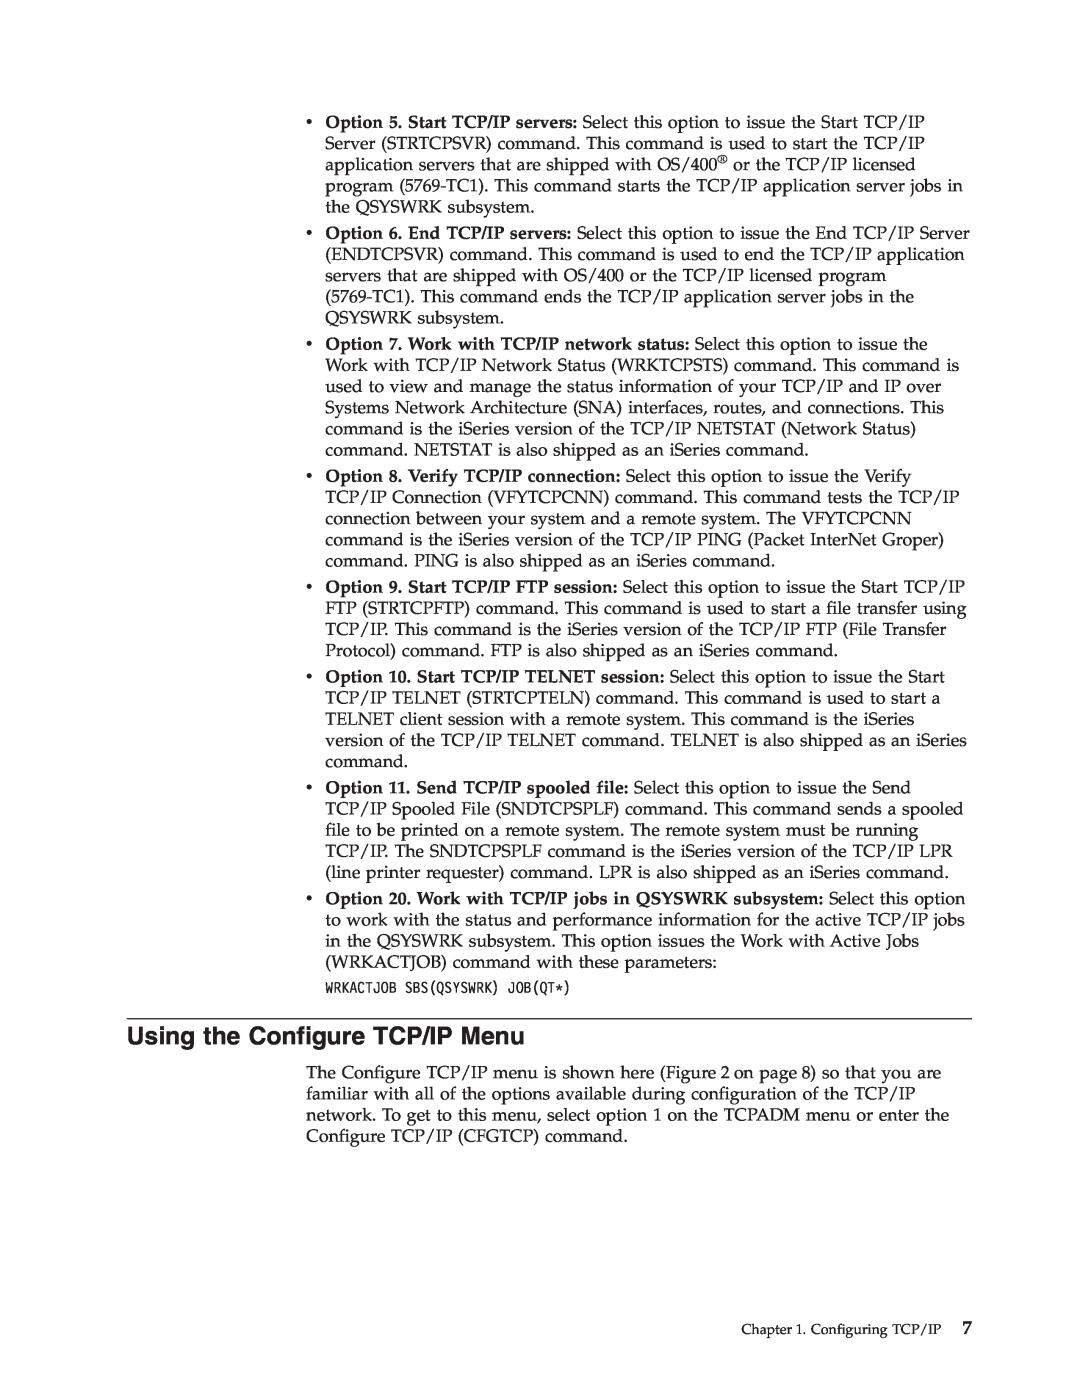 IBM SC41-5420-04 manual Using the Configure TCP/IP Menu, Wrkactjob Sbsqsyswrk Jobqt 